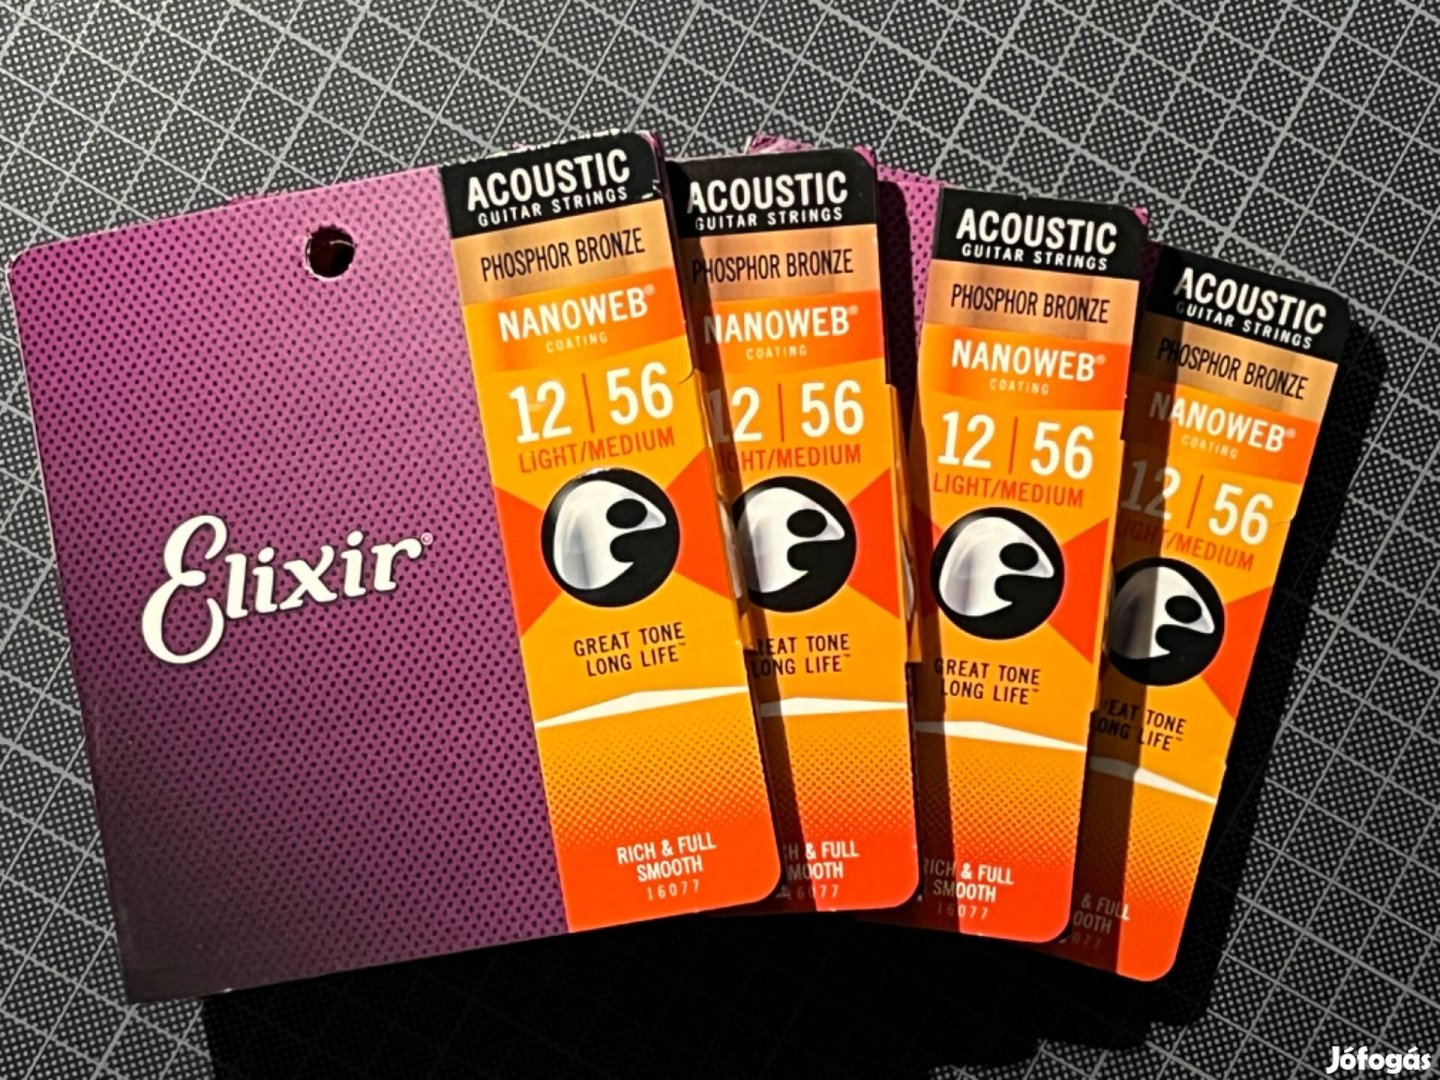 Elixir Acoustic - Phosphor Bronze 12/56 - 4 csomag(!)